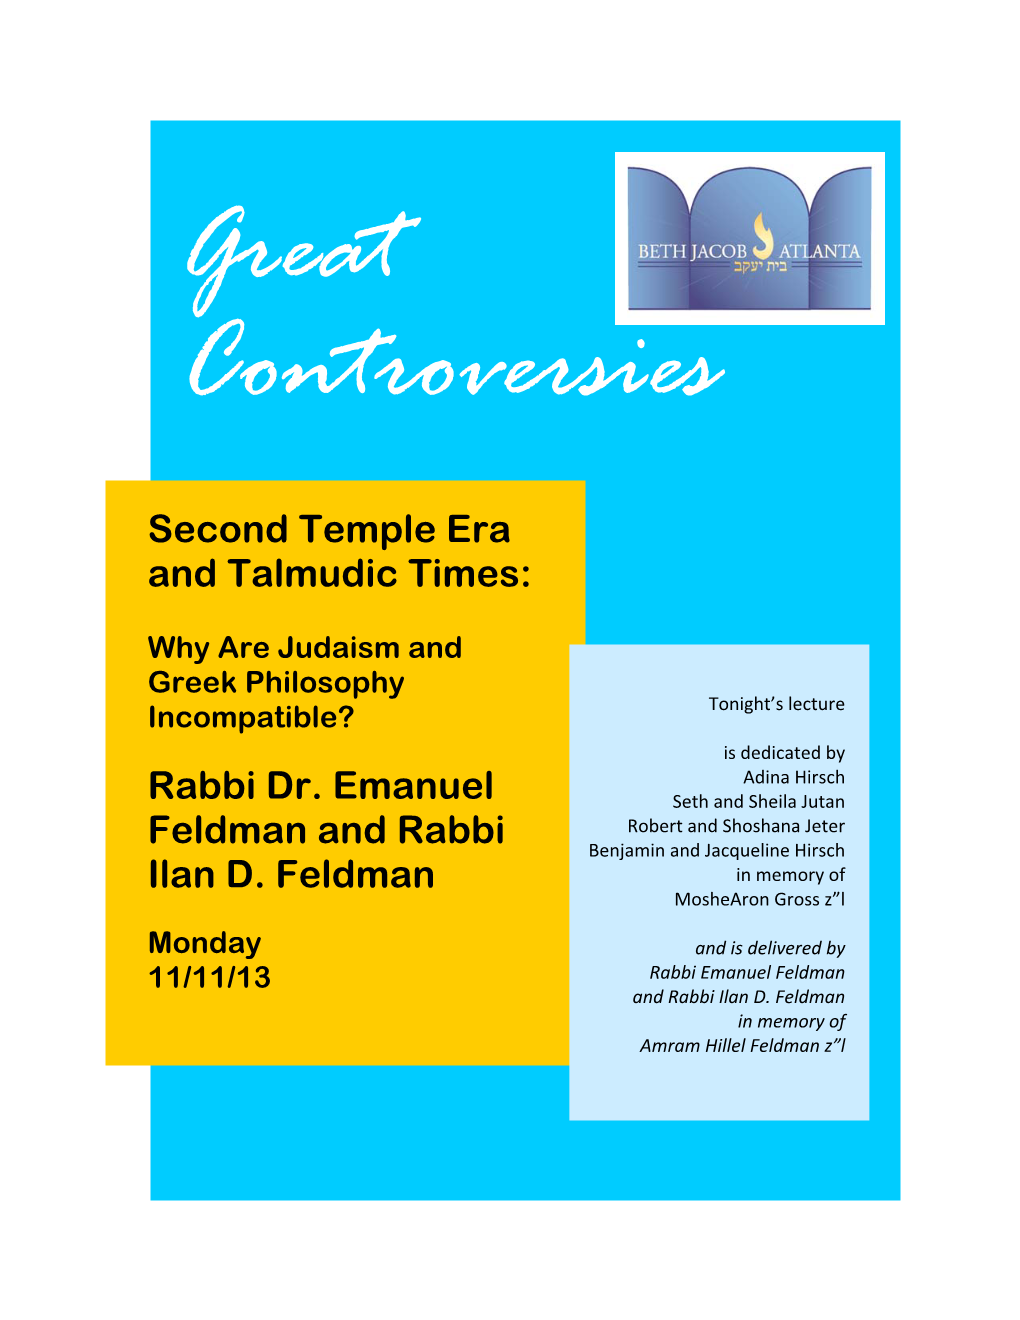 Rabbi Dr. Emanuel Feldman and Rabbi Ilan D. Feldman